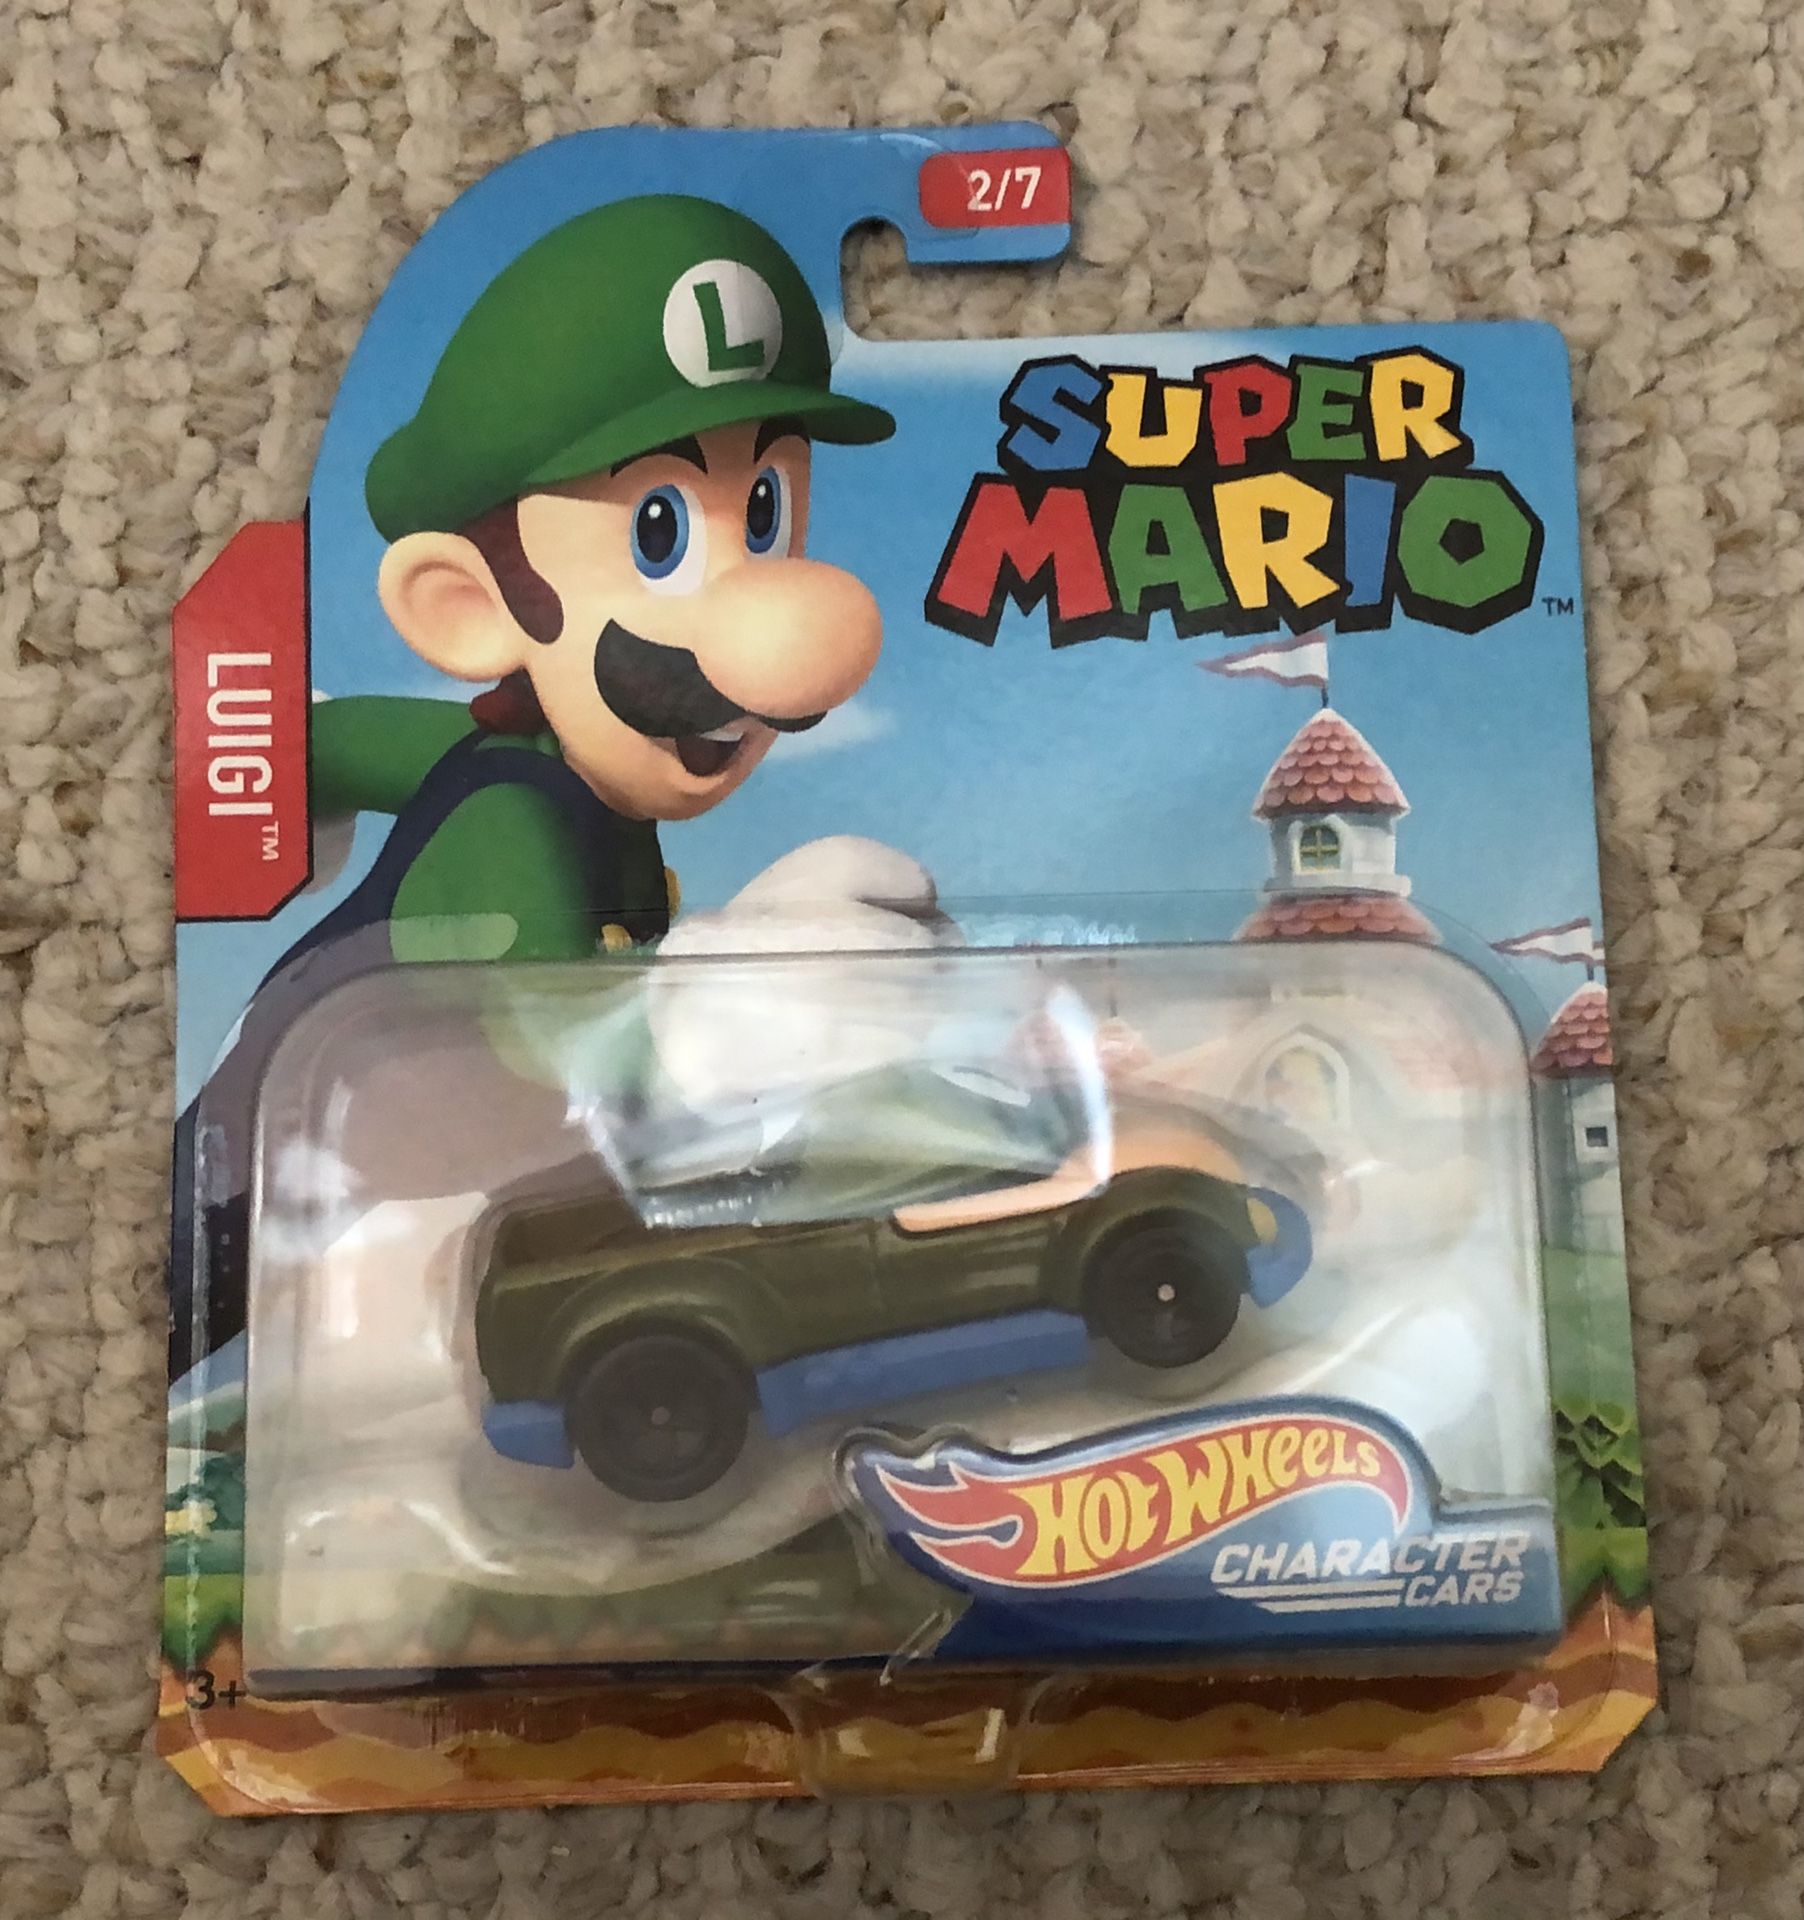 Super Mario Hot-Wheels Character Luigi